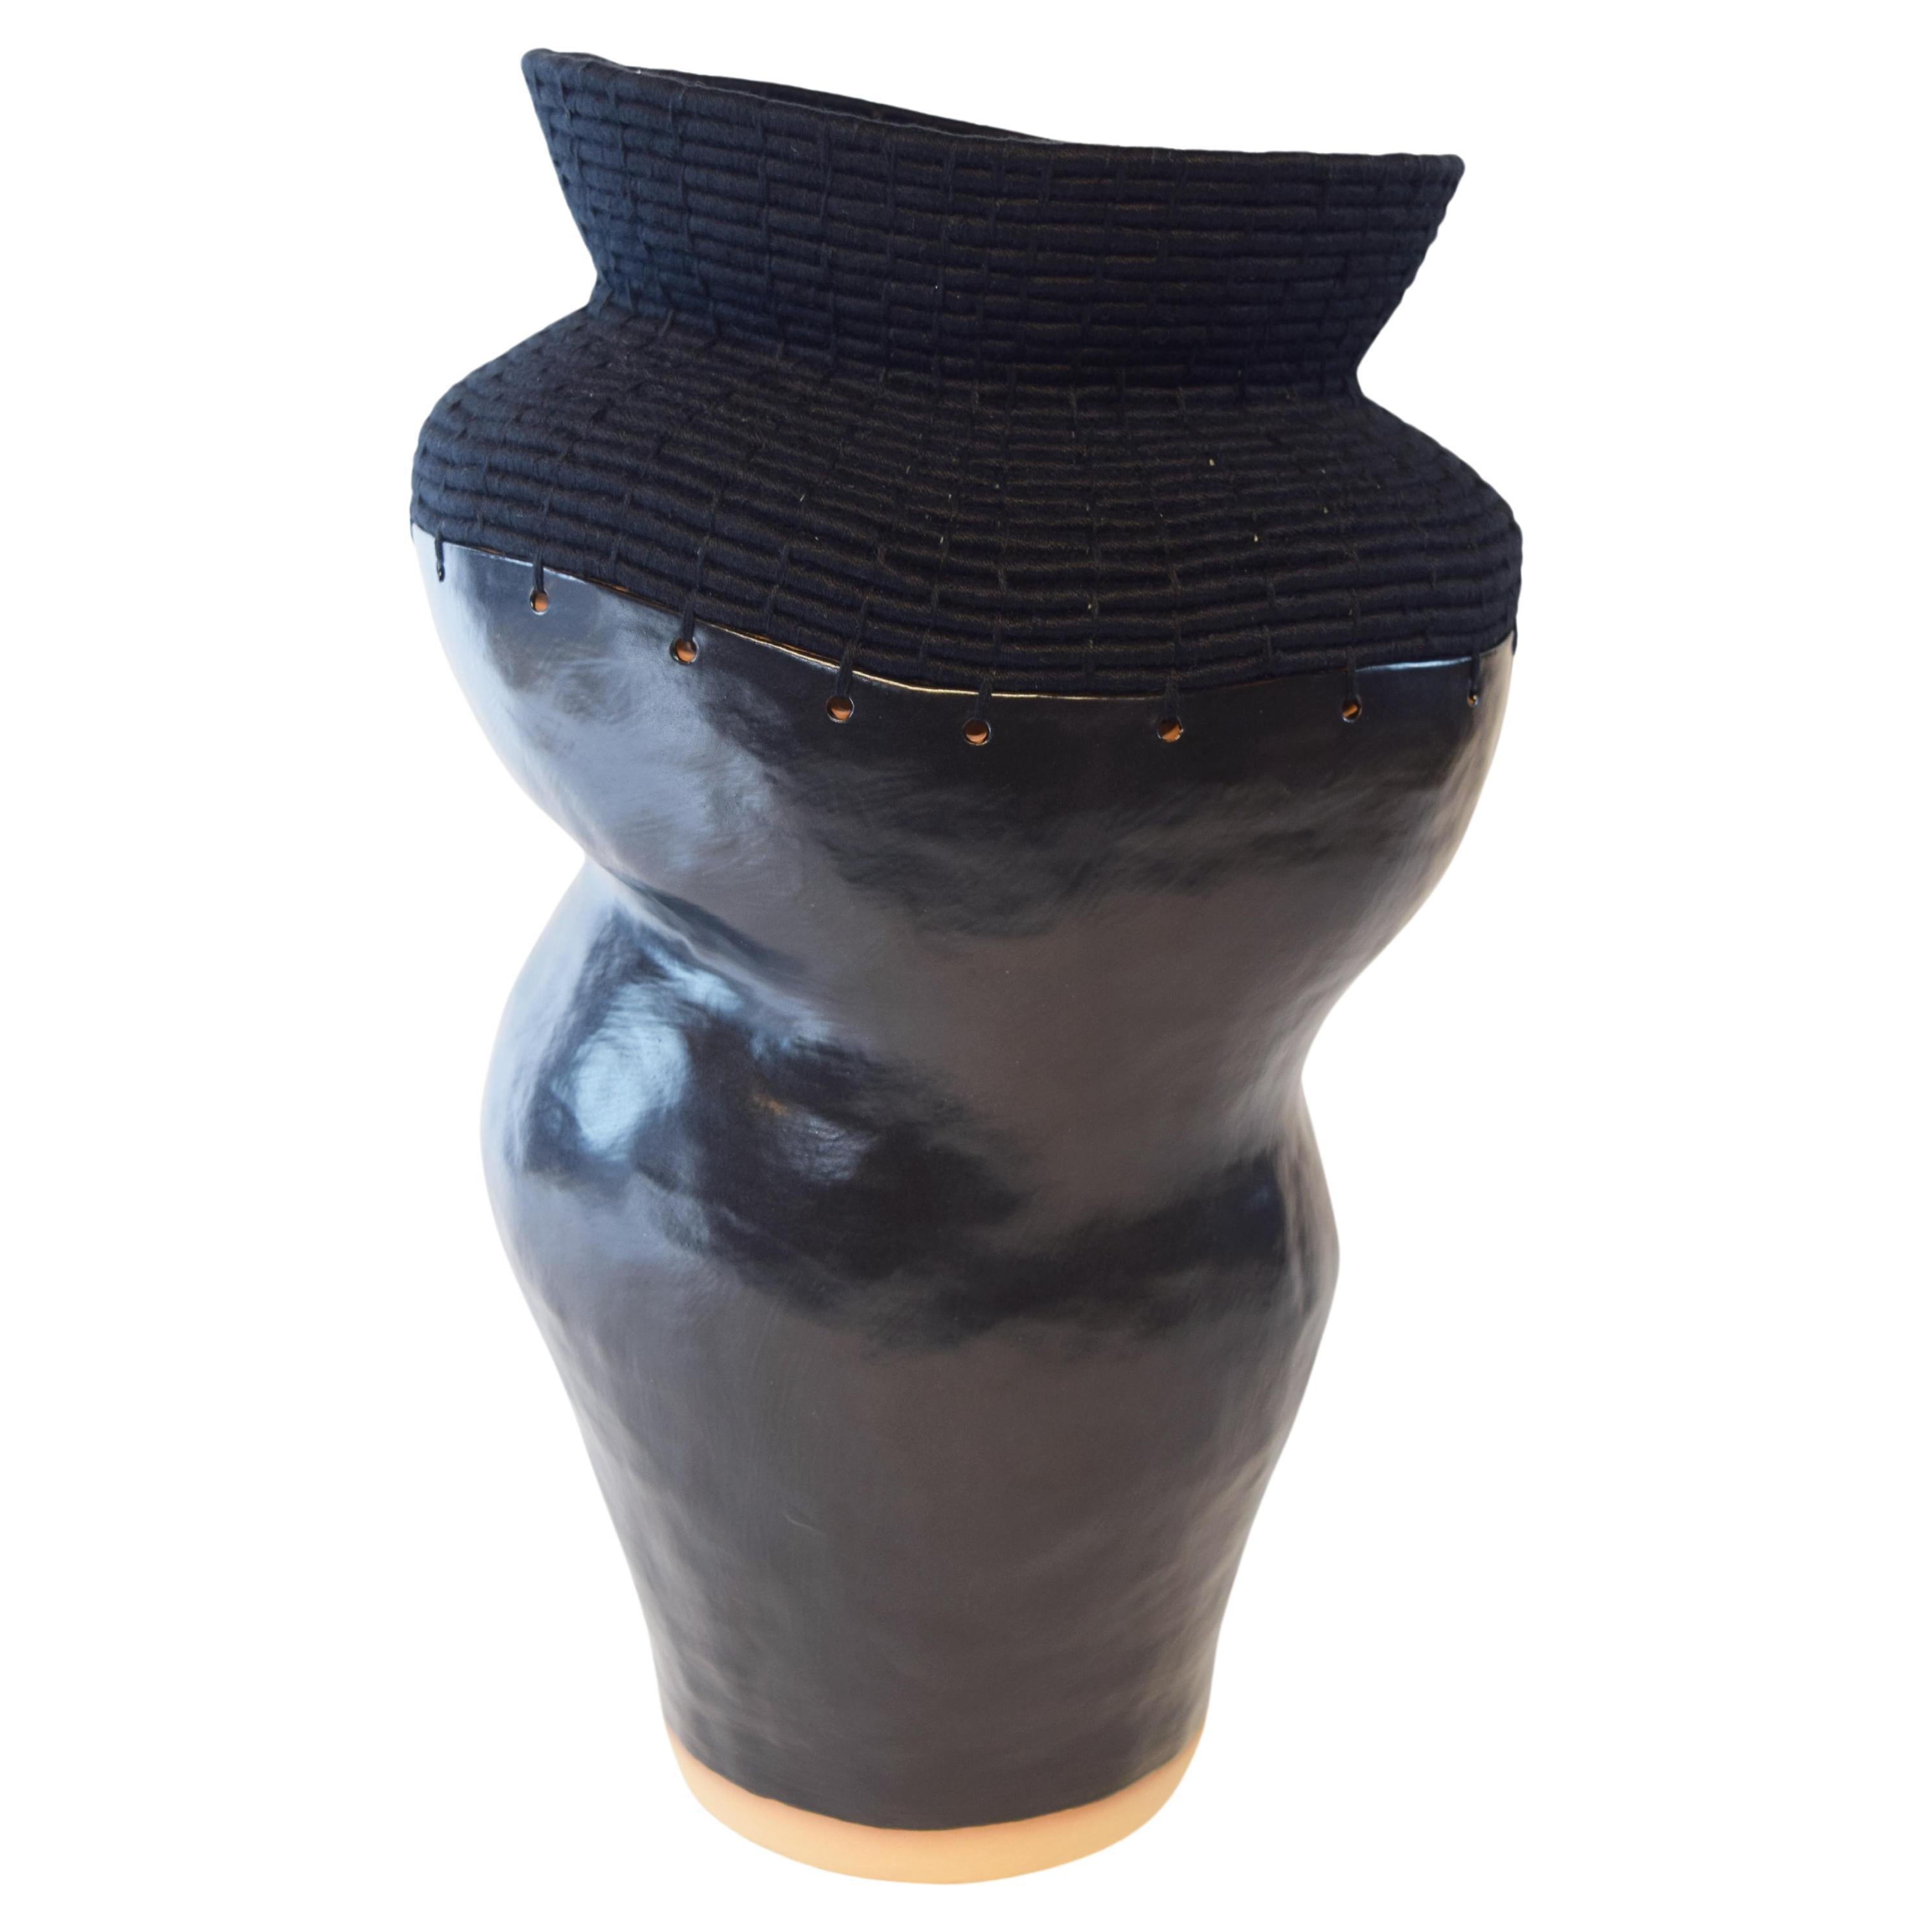 One of a Kind Ceramic & Woven Fiber Vessel #762, Satin Black Glaze, Black Cotton For Sale